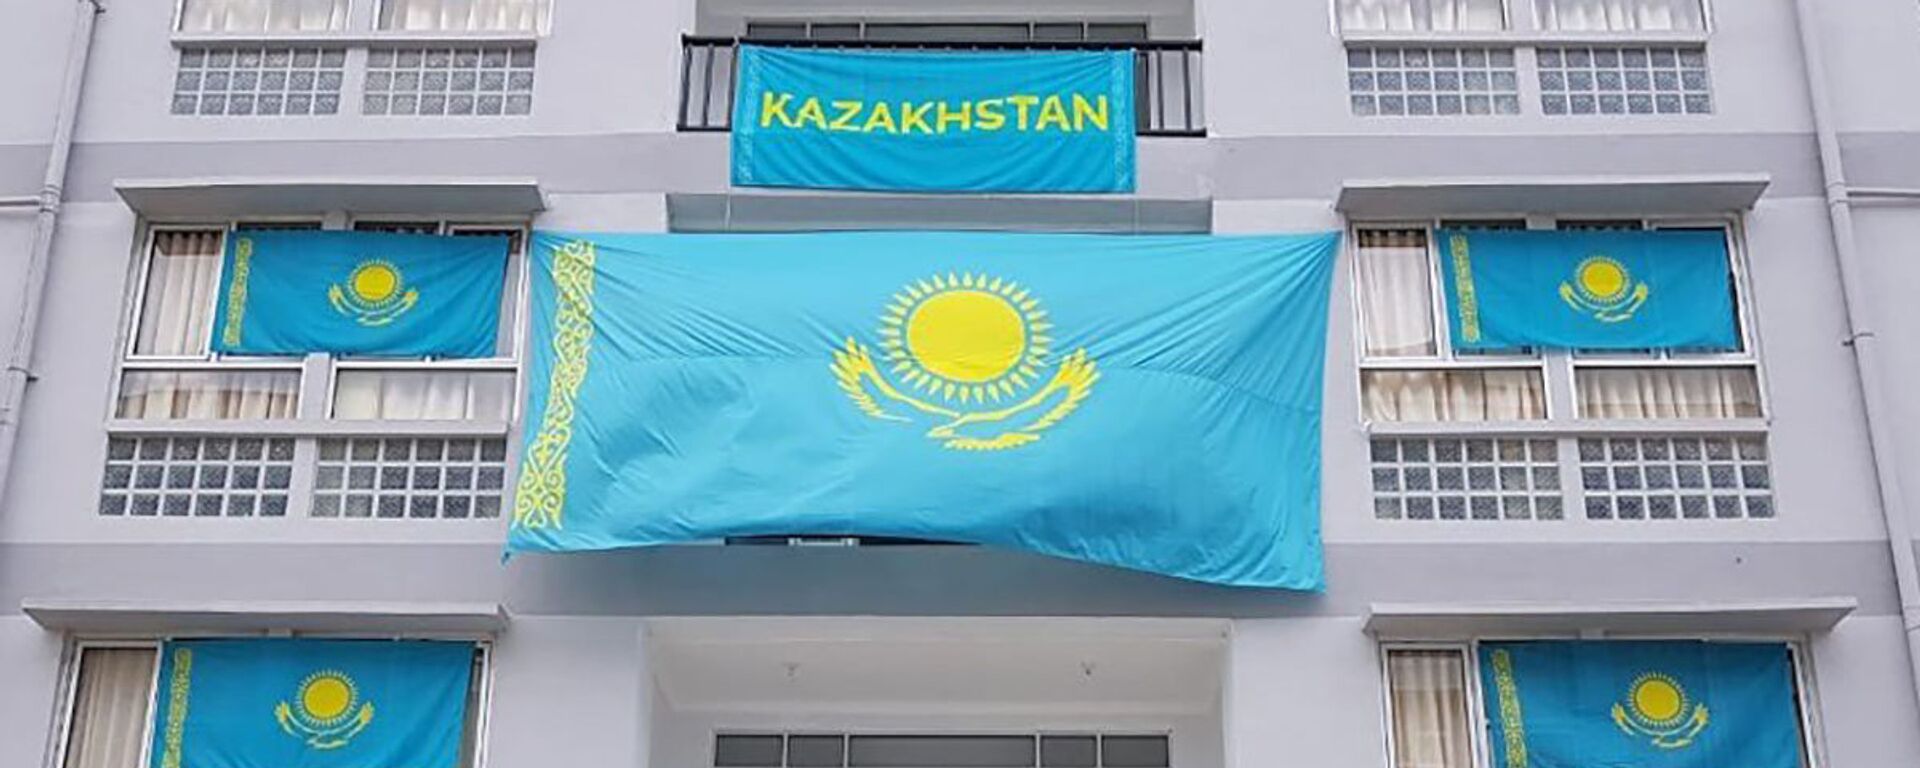 Флаг Казахстана на балконе и окнах в Олимпийской деревне, архивное фото - Sputnik Казахстан, 1920, 03.12.2020